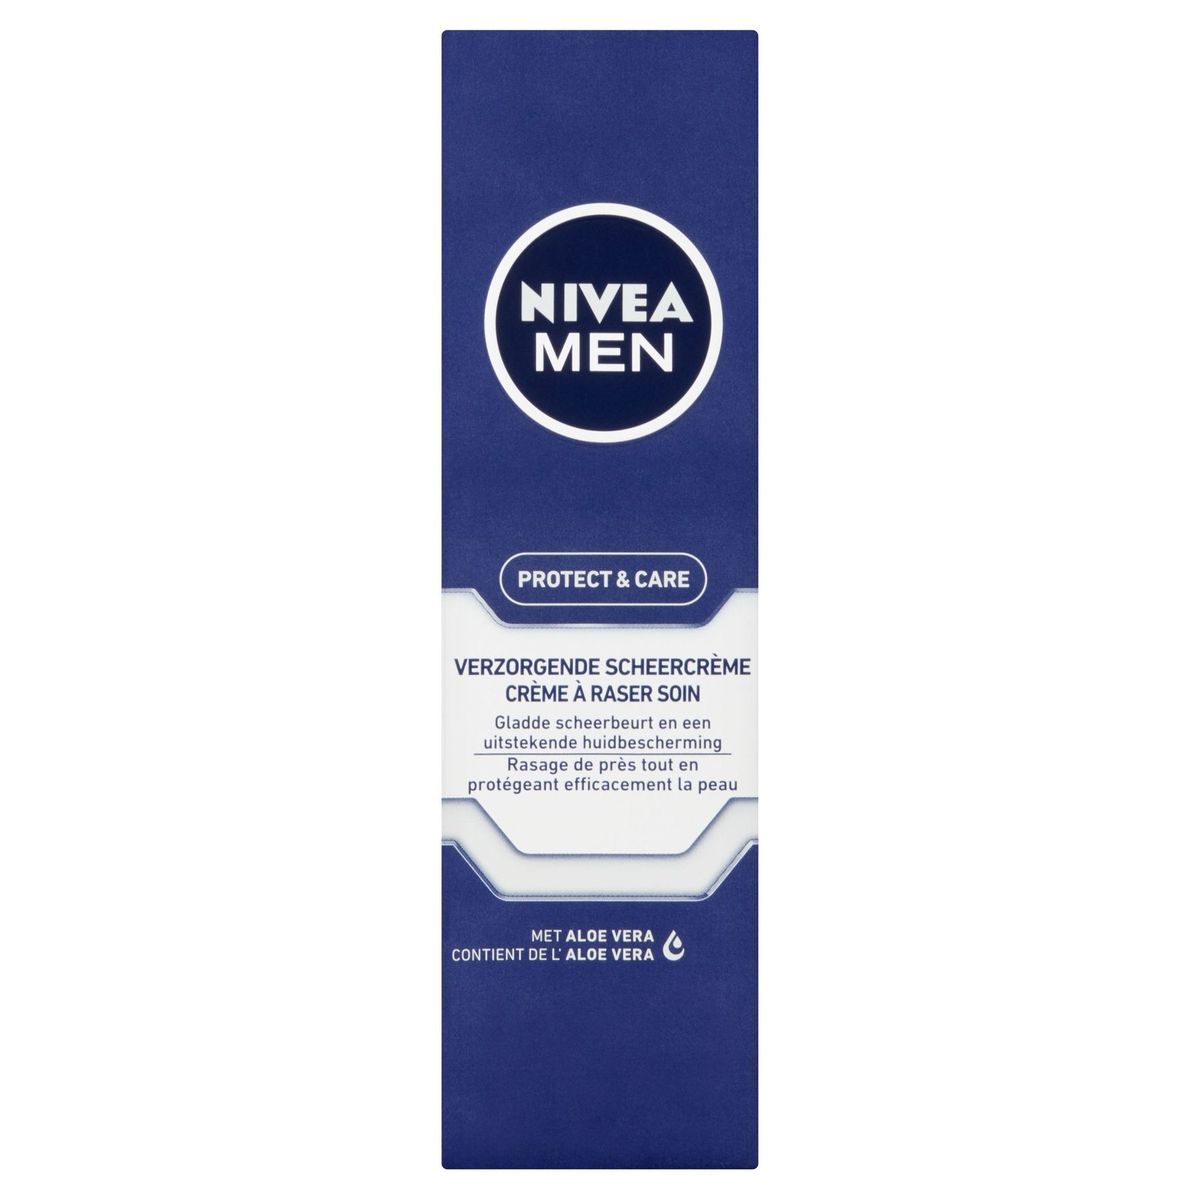 Nivea Men Protect & Care Verzorgende Scheercrème 100 ml